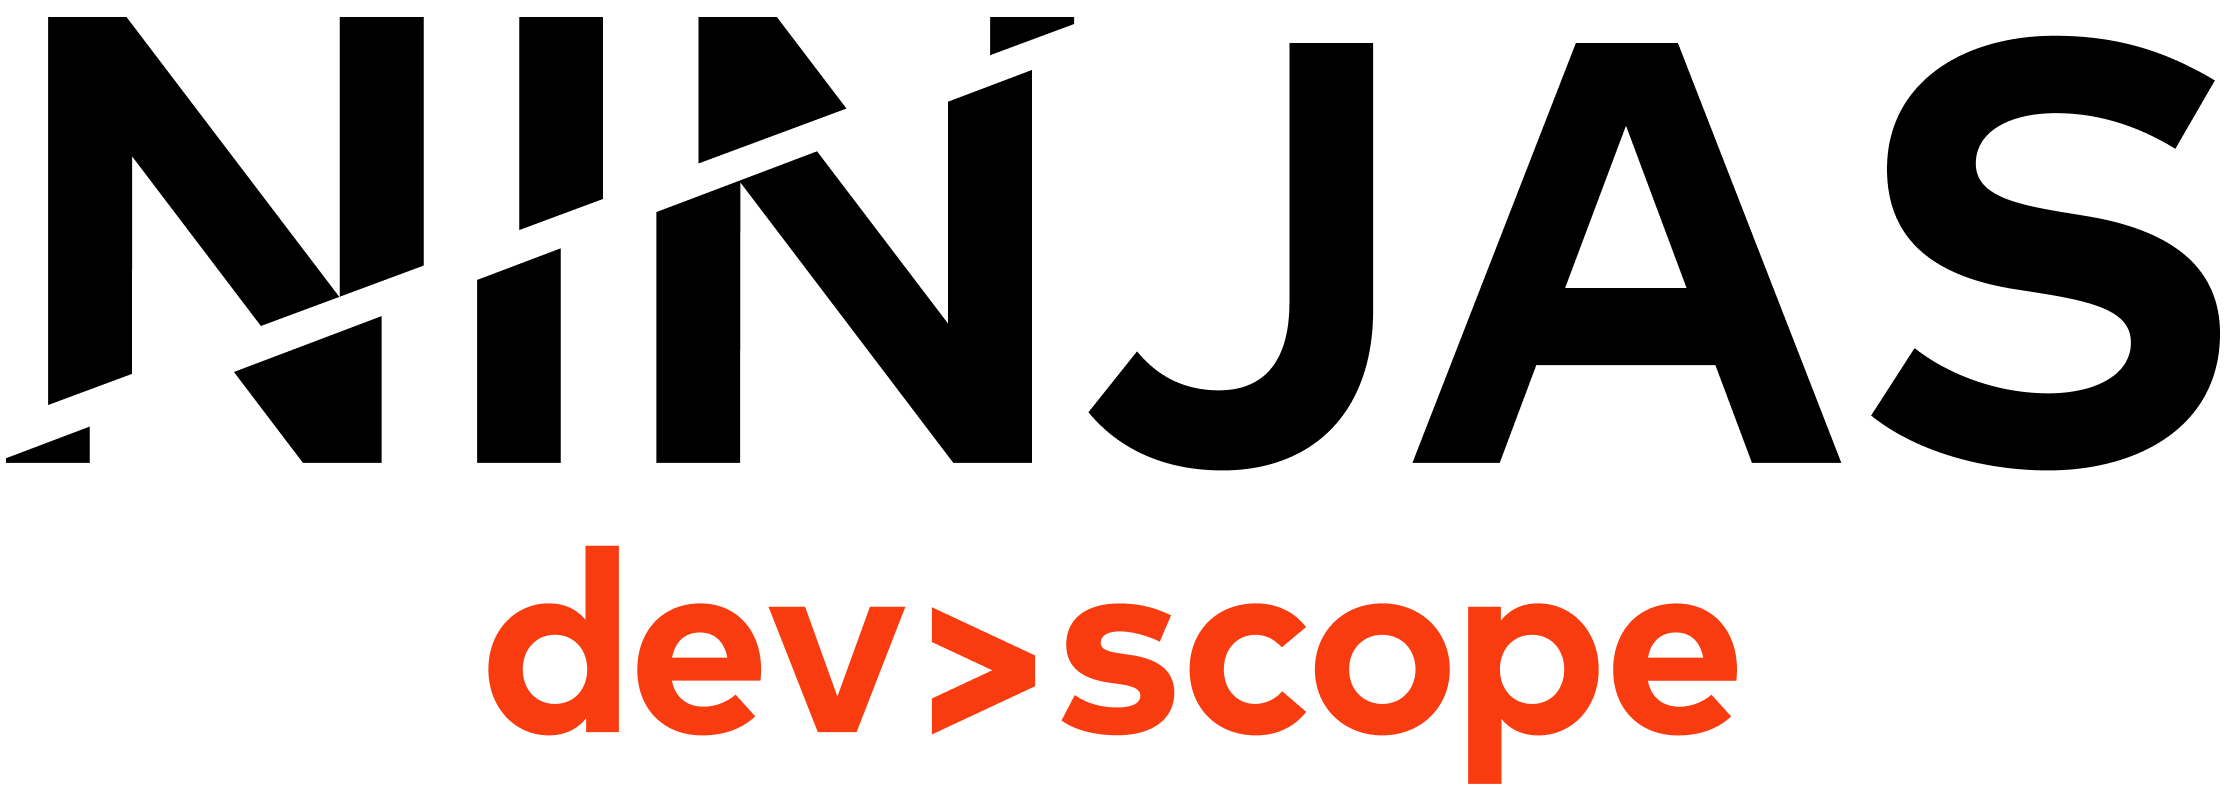 DevScope Ninjas logo